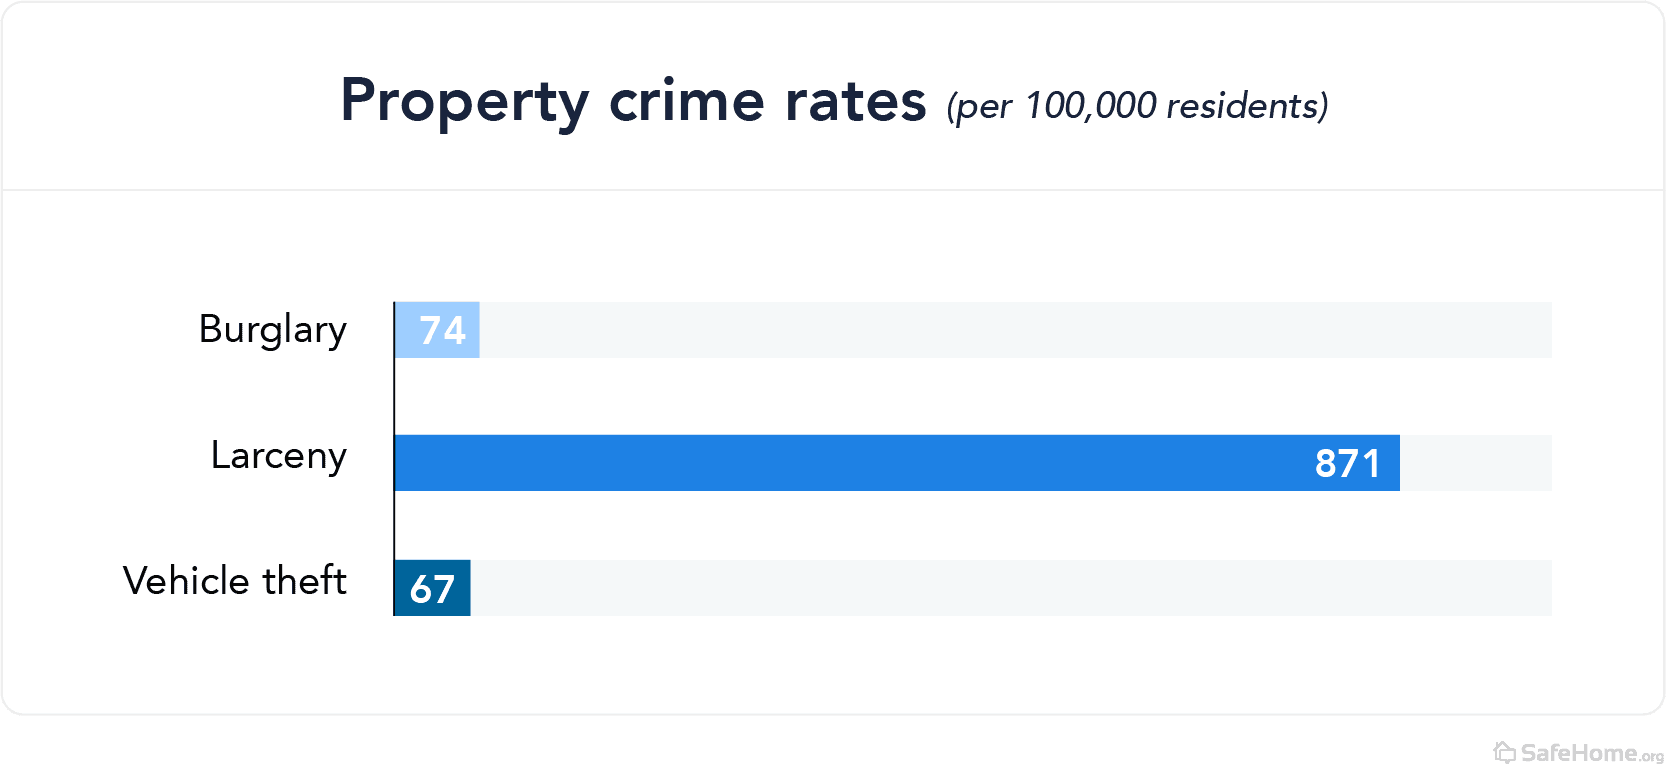 New Hampshire Property Crime Rates